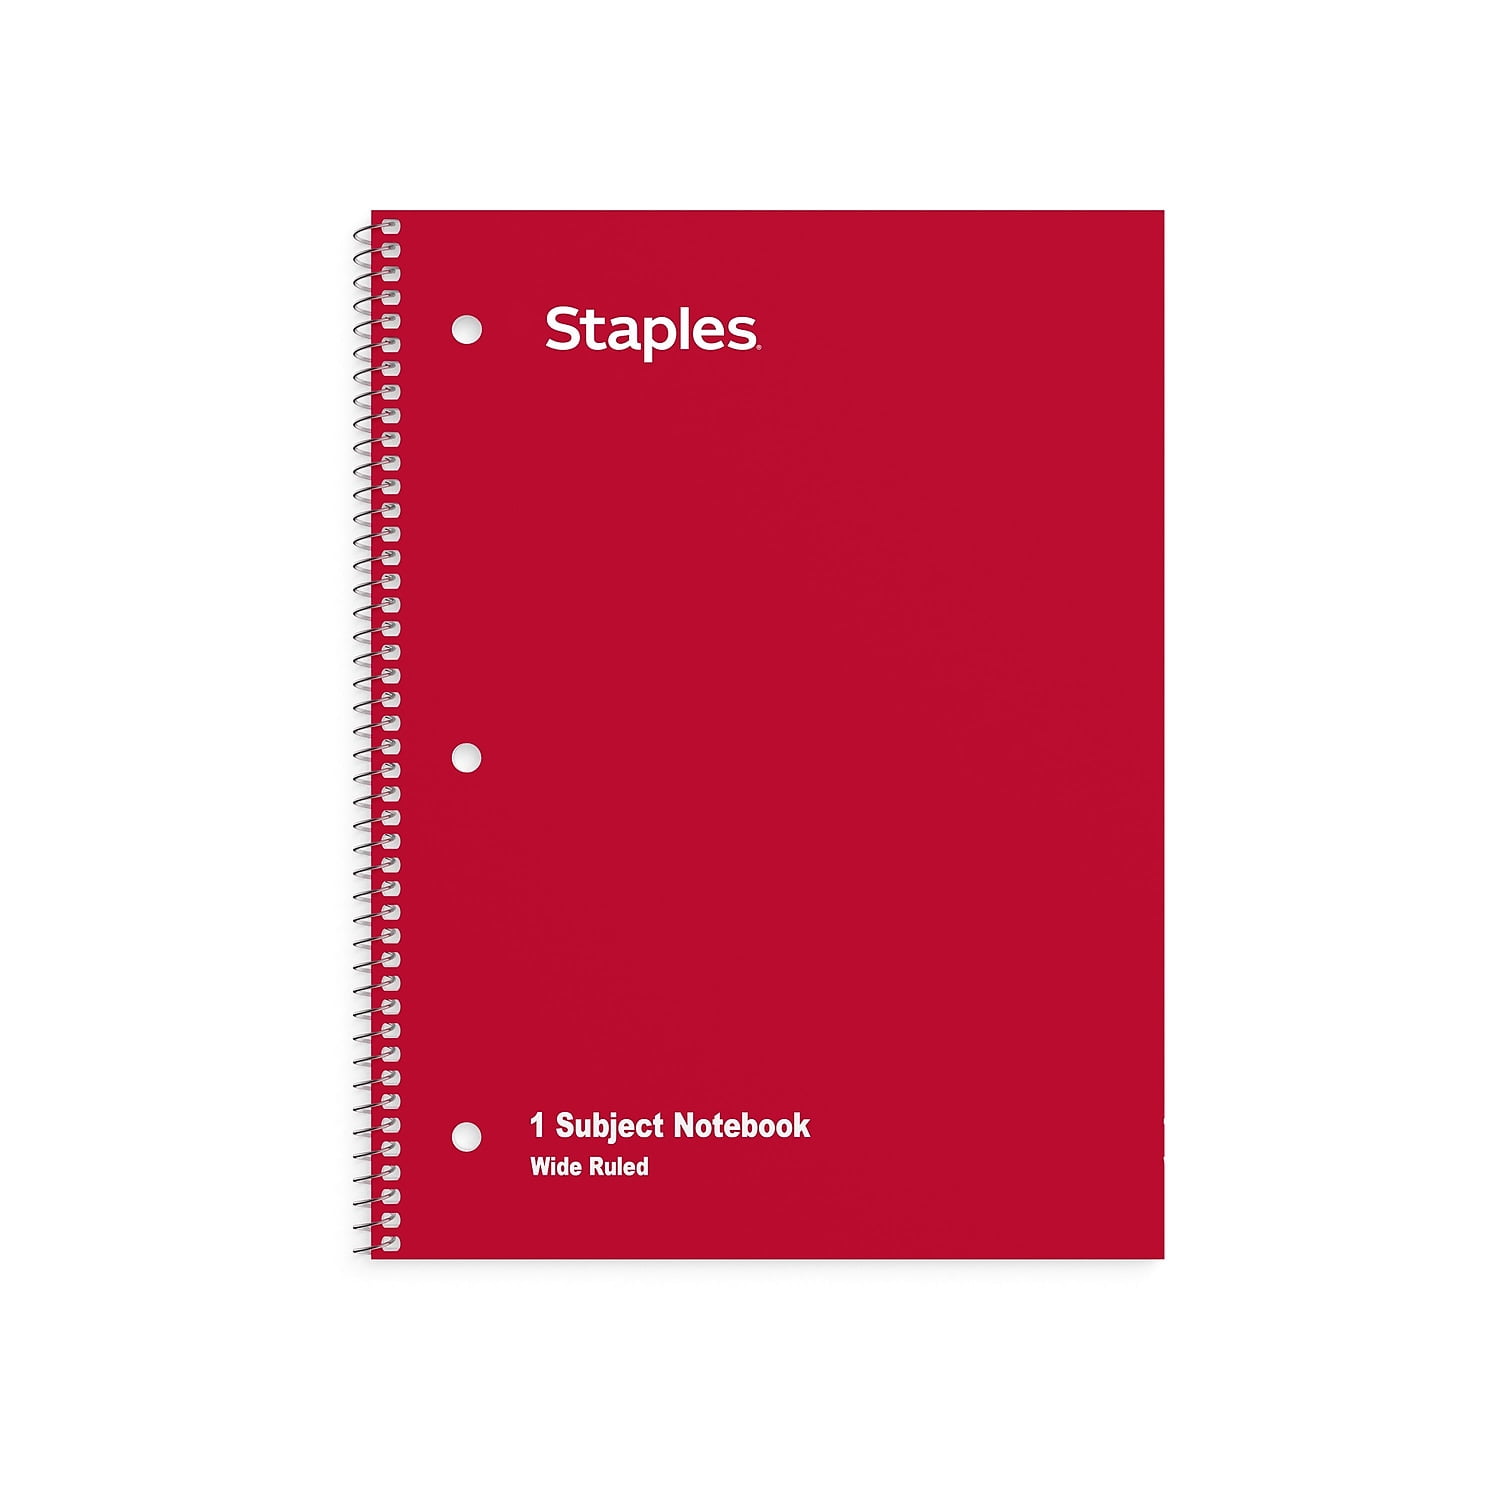 Black n Red NotebookJournal 8 14 x 5 78 BlackRed 70 Sheets - Office Depot